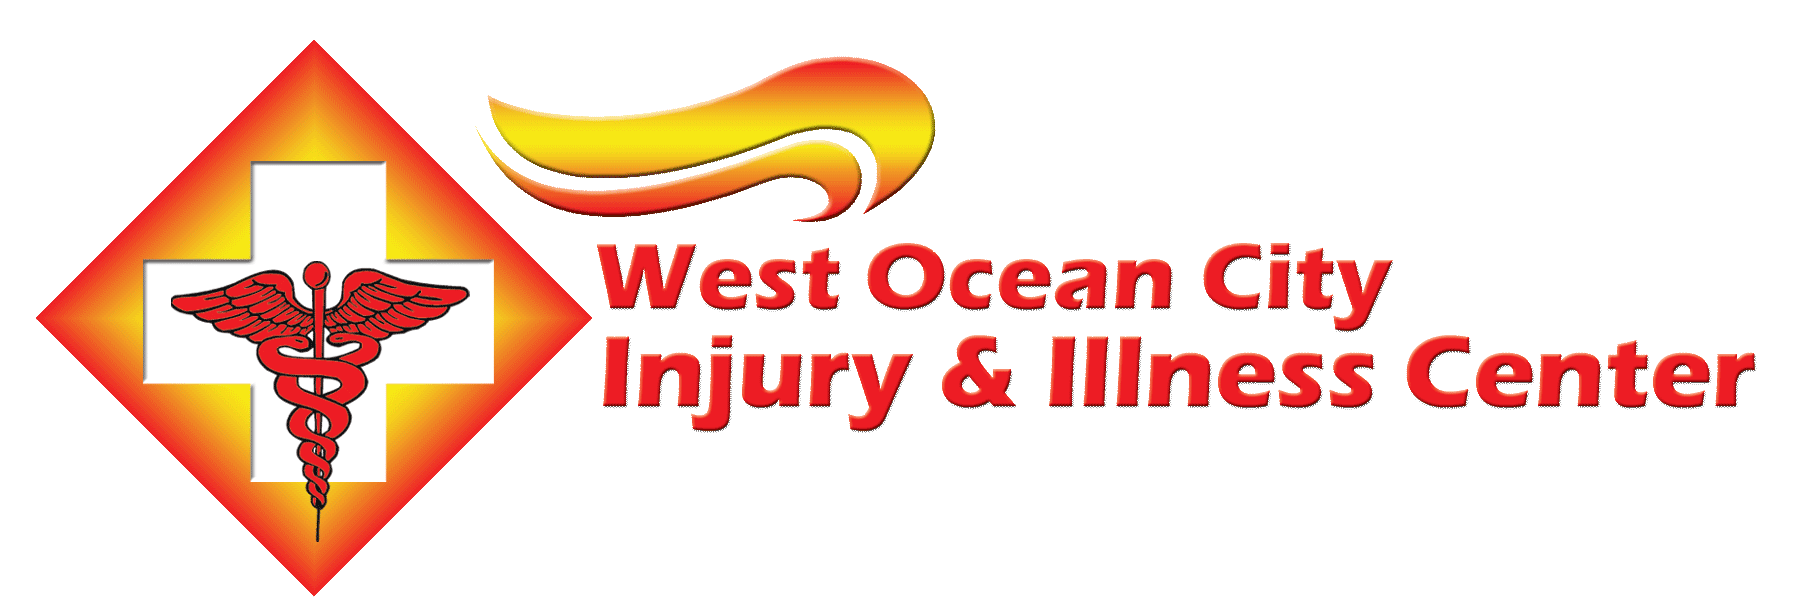 West Oc Injury Center & Illness Center